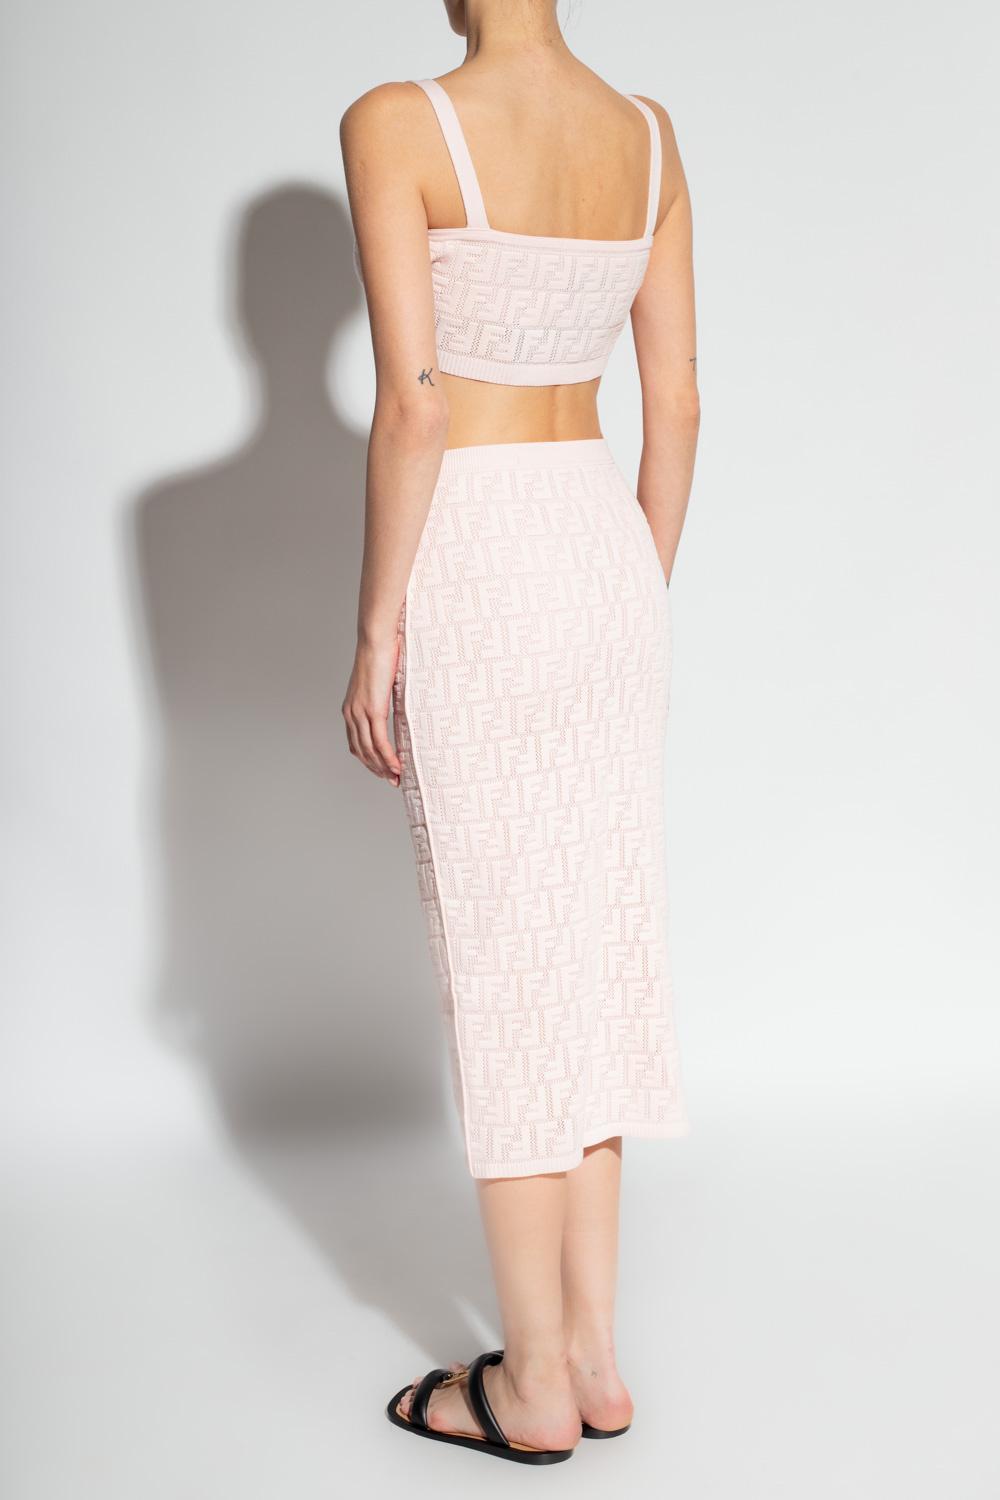 Fendi Top & Skirt Set in Pink | Lyst